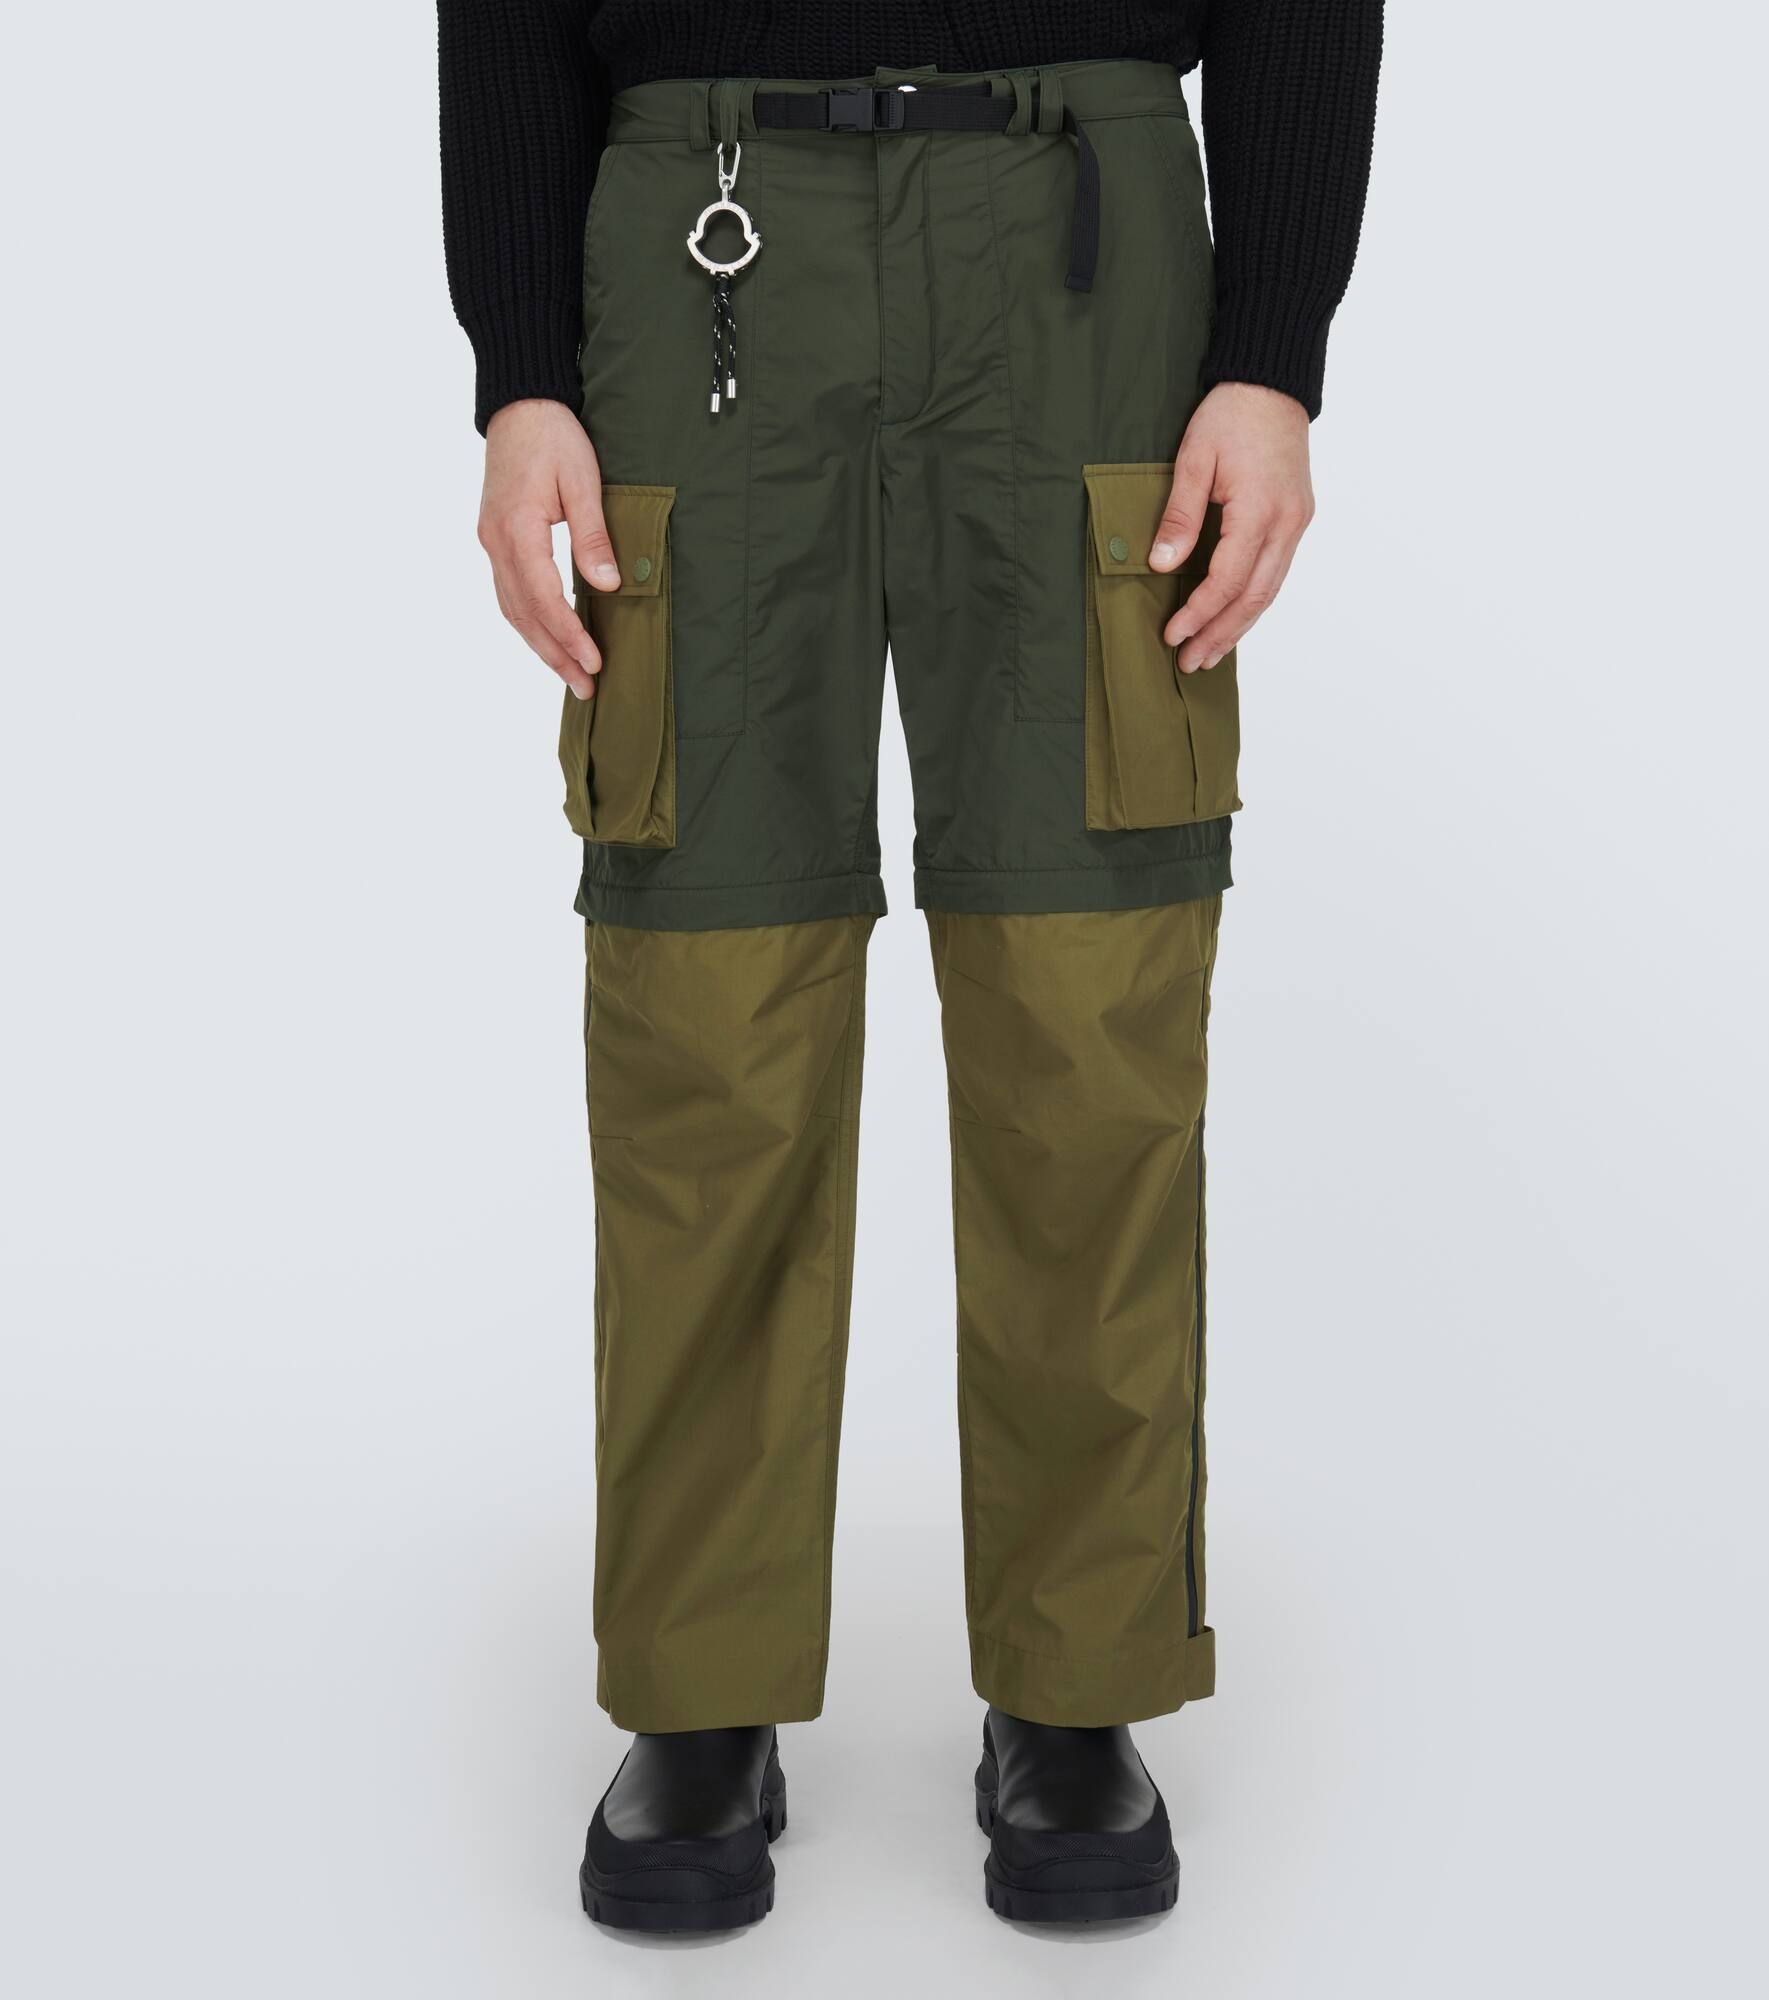 x Pharrell Williams cargo pants - 3